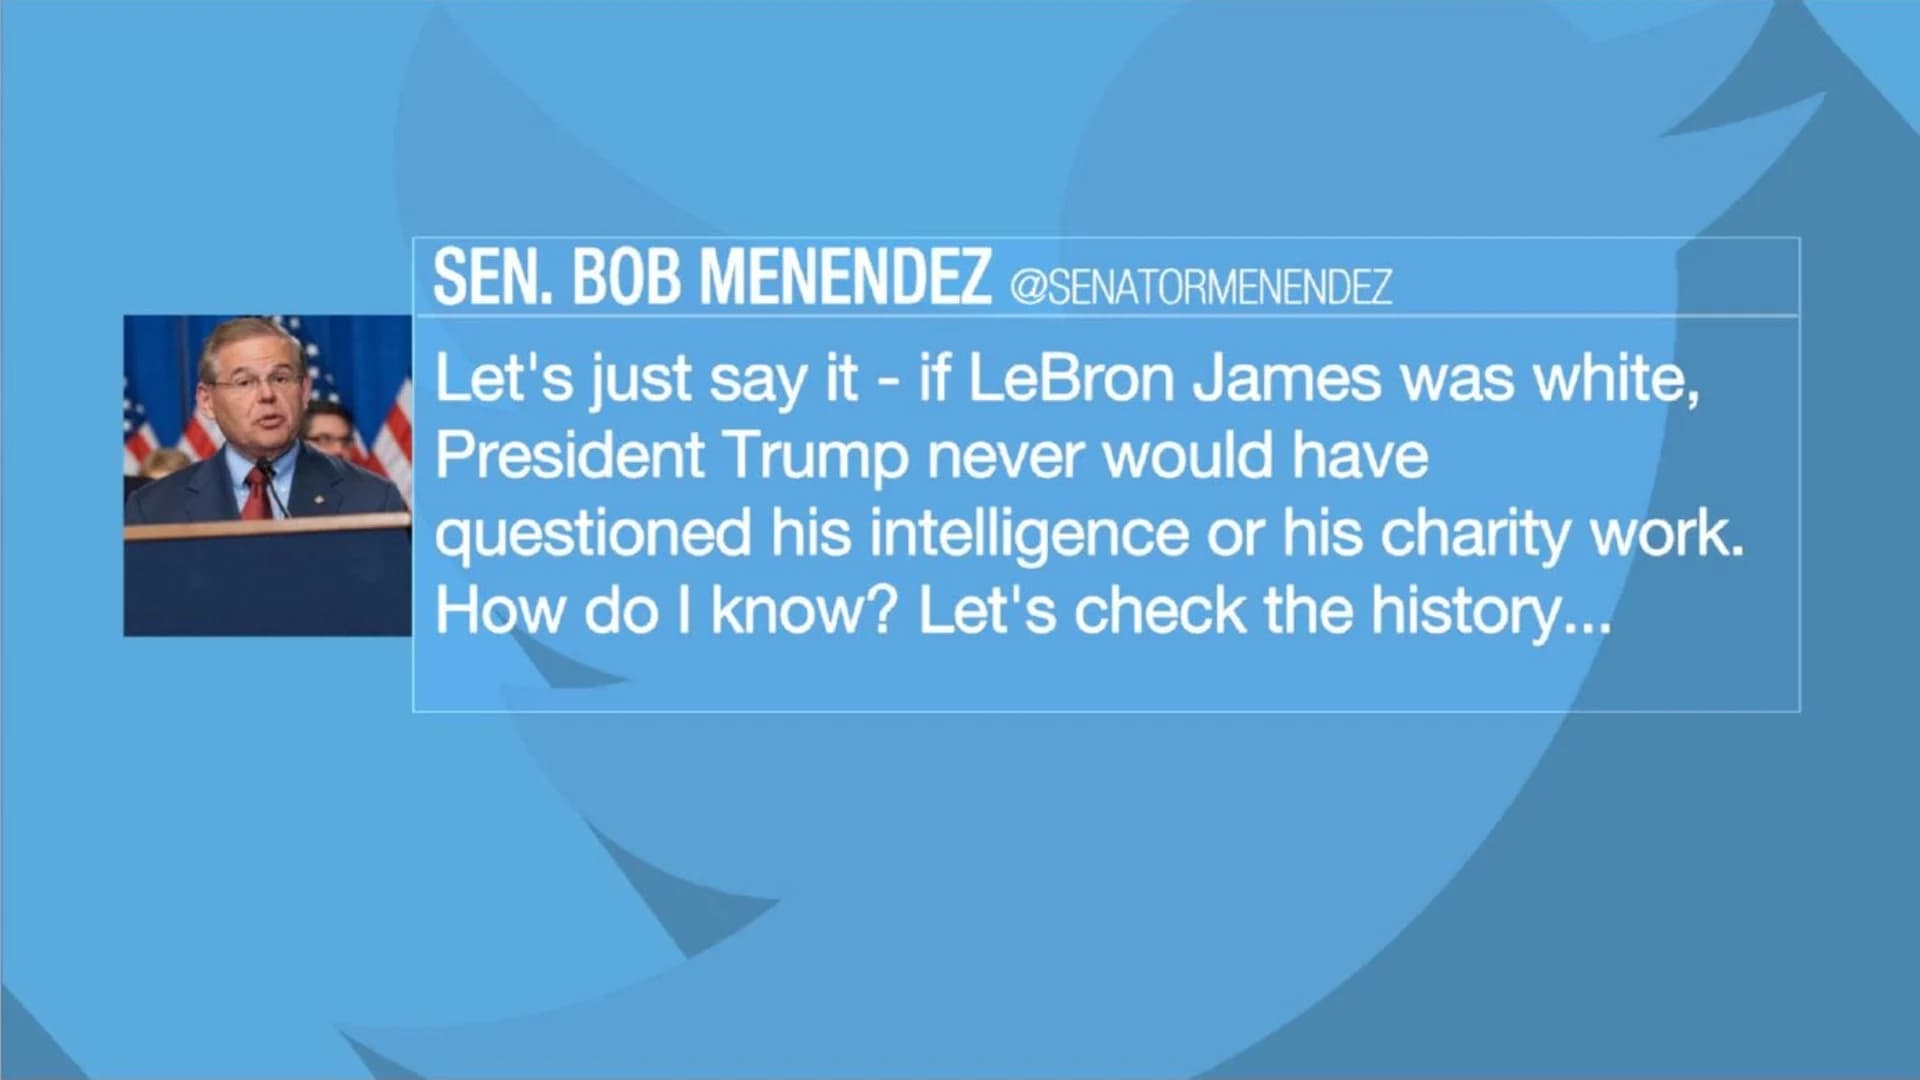 Sen. Bob Menendez calls Trump's attack on LeBron James racist